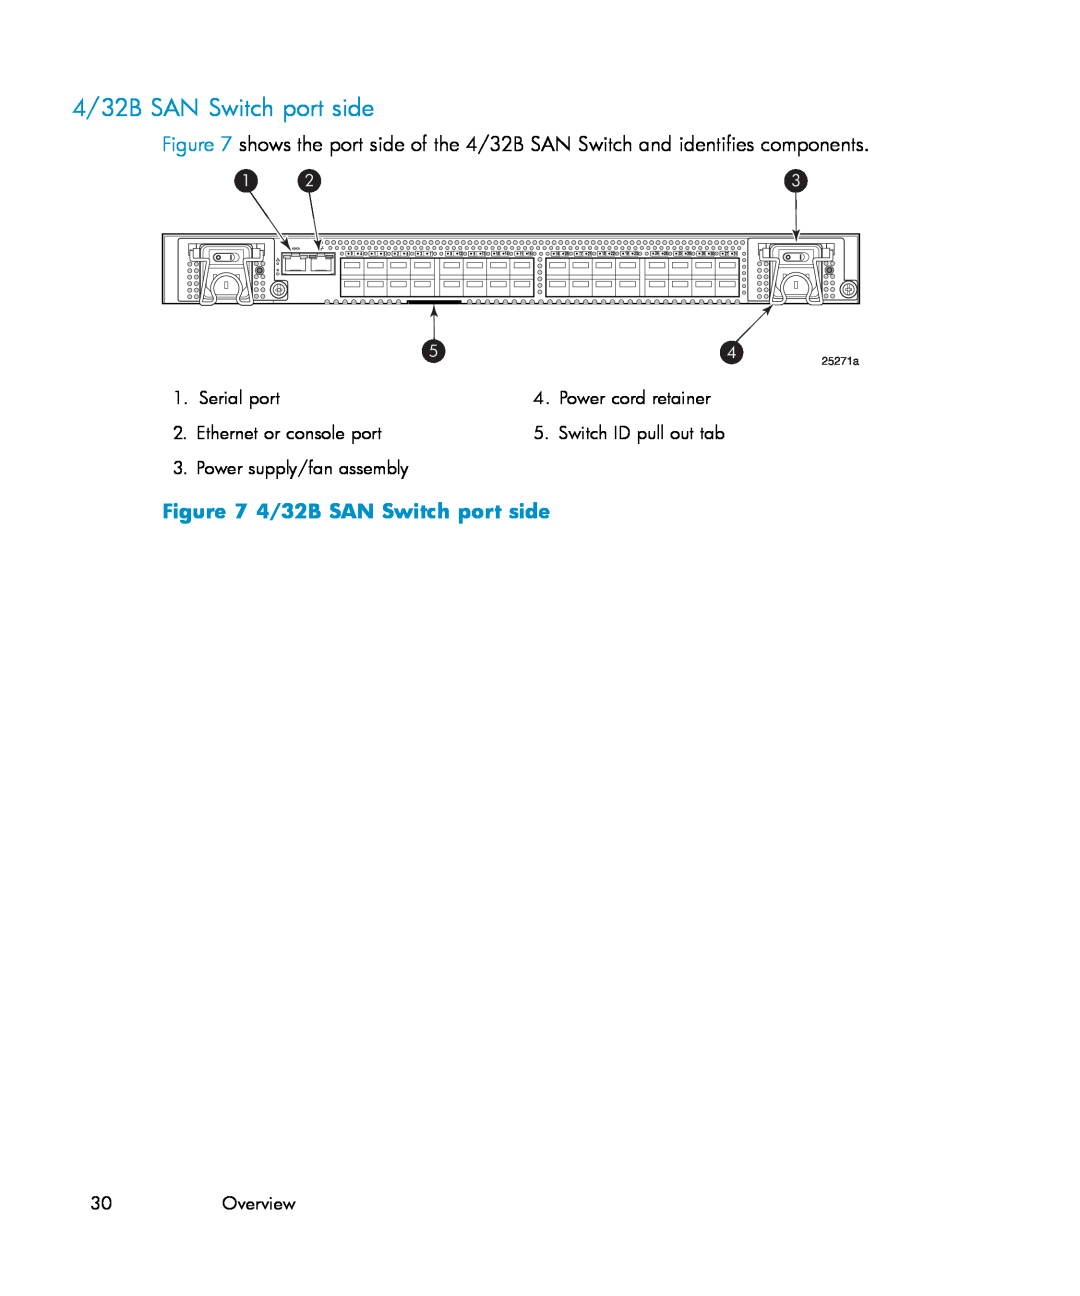 IBM AA-RWF3A-TE manual 4/32B SAN Switch port side, 25271a 